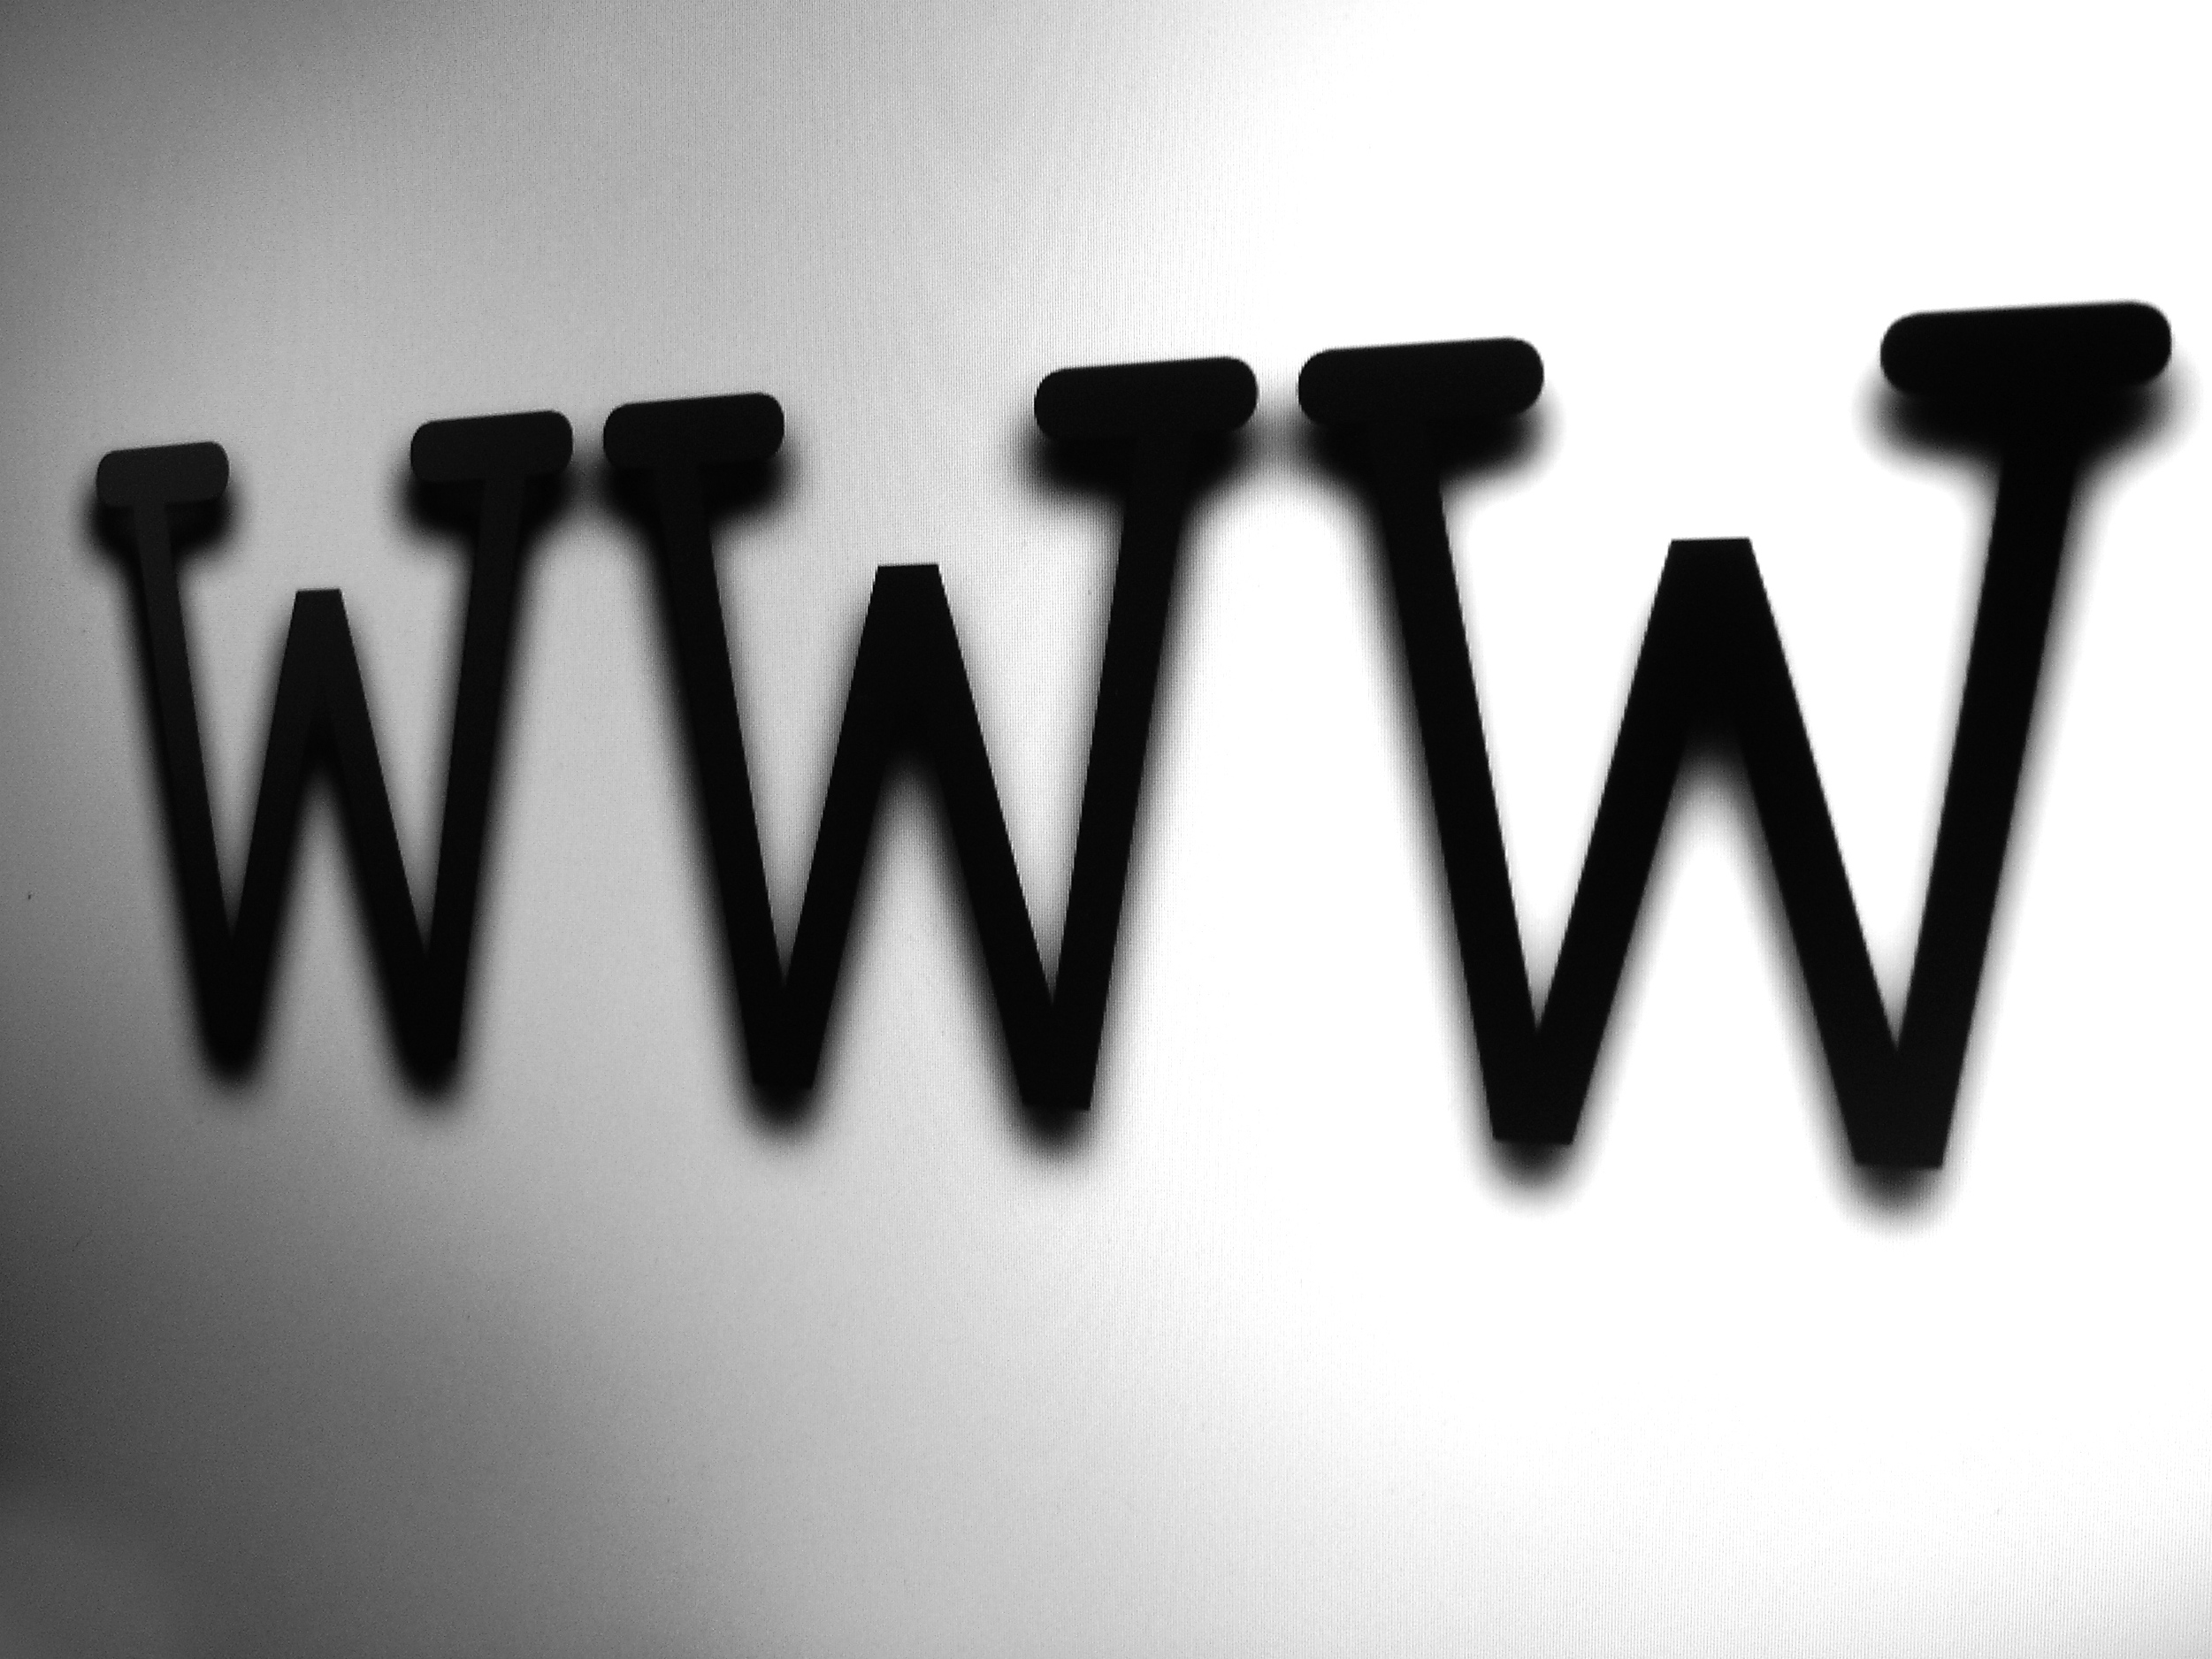 Online XXX domains offered to non-porn companies | TechRadar